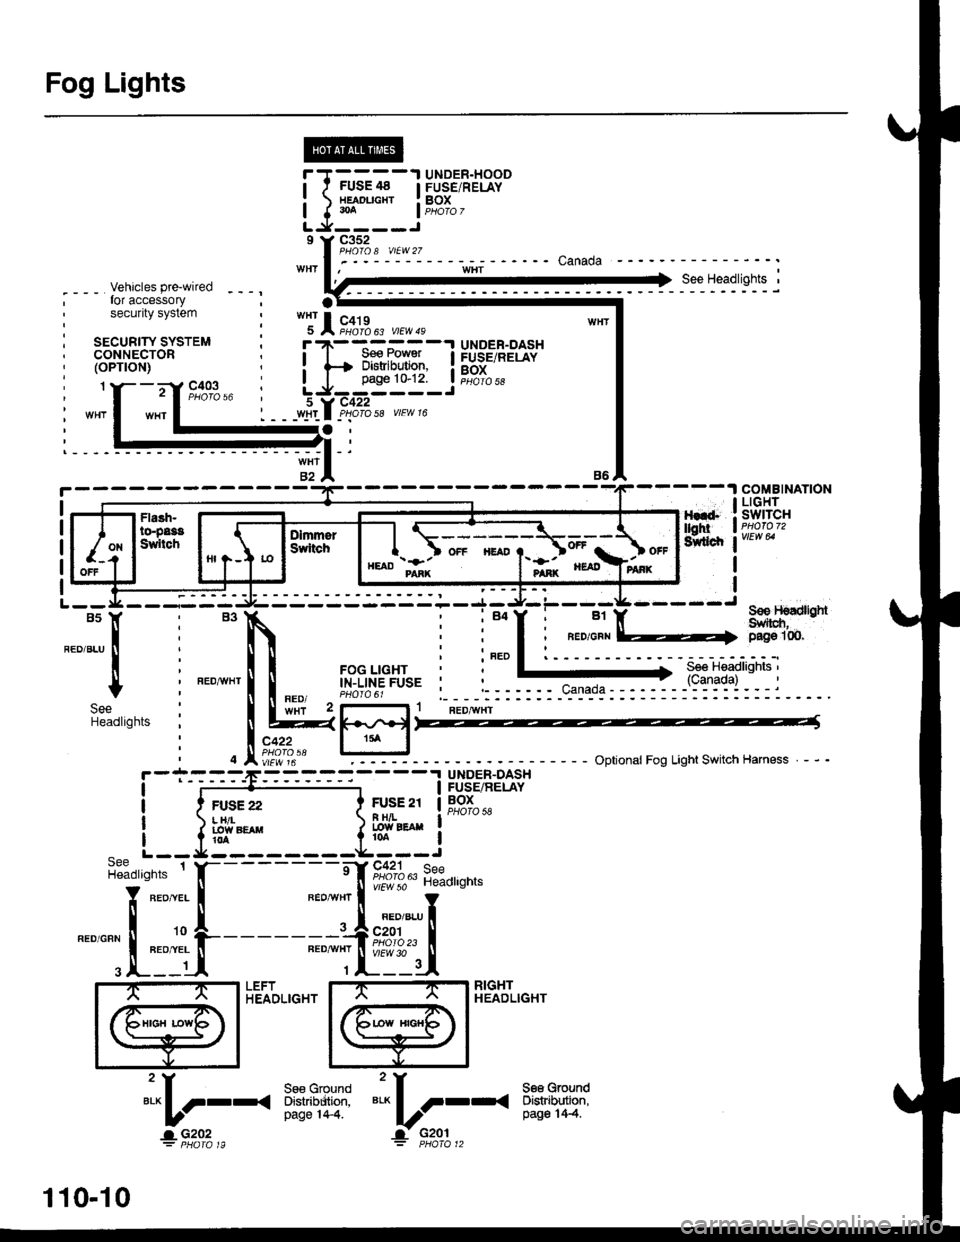 HONDA CIVIC 1998 6.G Workshop Manual Fog Lights
_ Vehicles prewiredfor accessorysecurity system
SECURITY SYSTEMCONNECTOR(oPT|ON)
"!19*13* 
u,.*,"
a
c403
----.t COMB|NAT|ON
: swrrcHI PHOIOT2
lvtEw u
I
I
FOG LIGHTIN-LINE FUSE
FUSFI H,lt